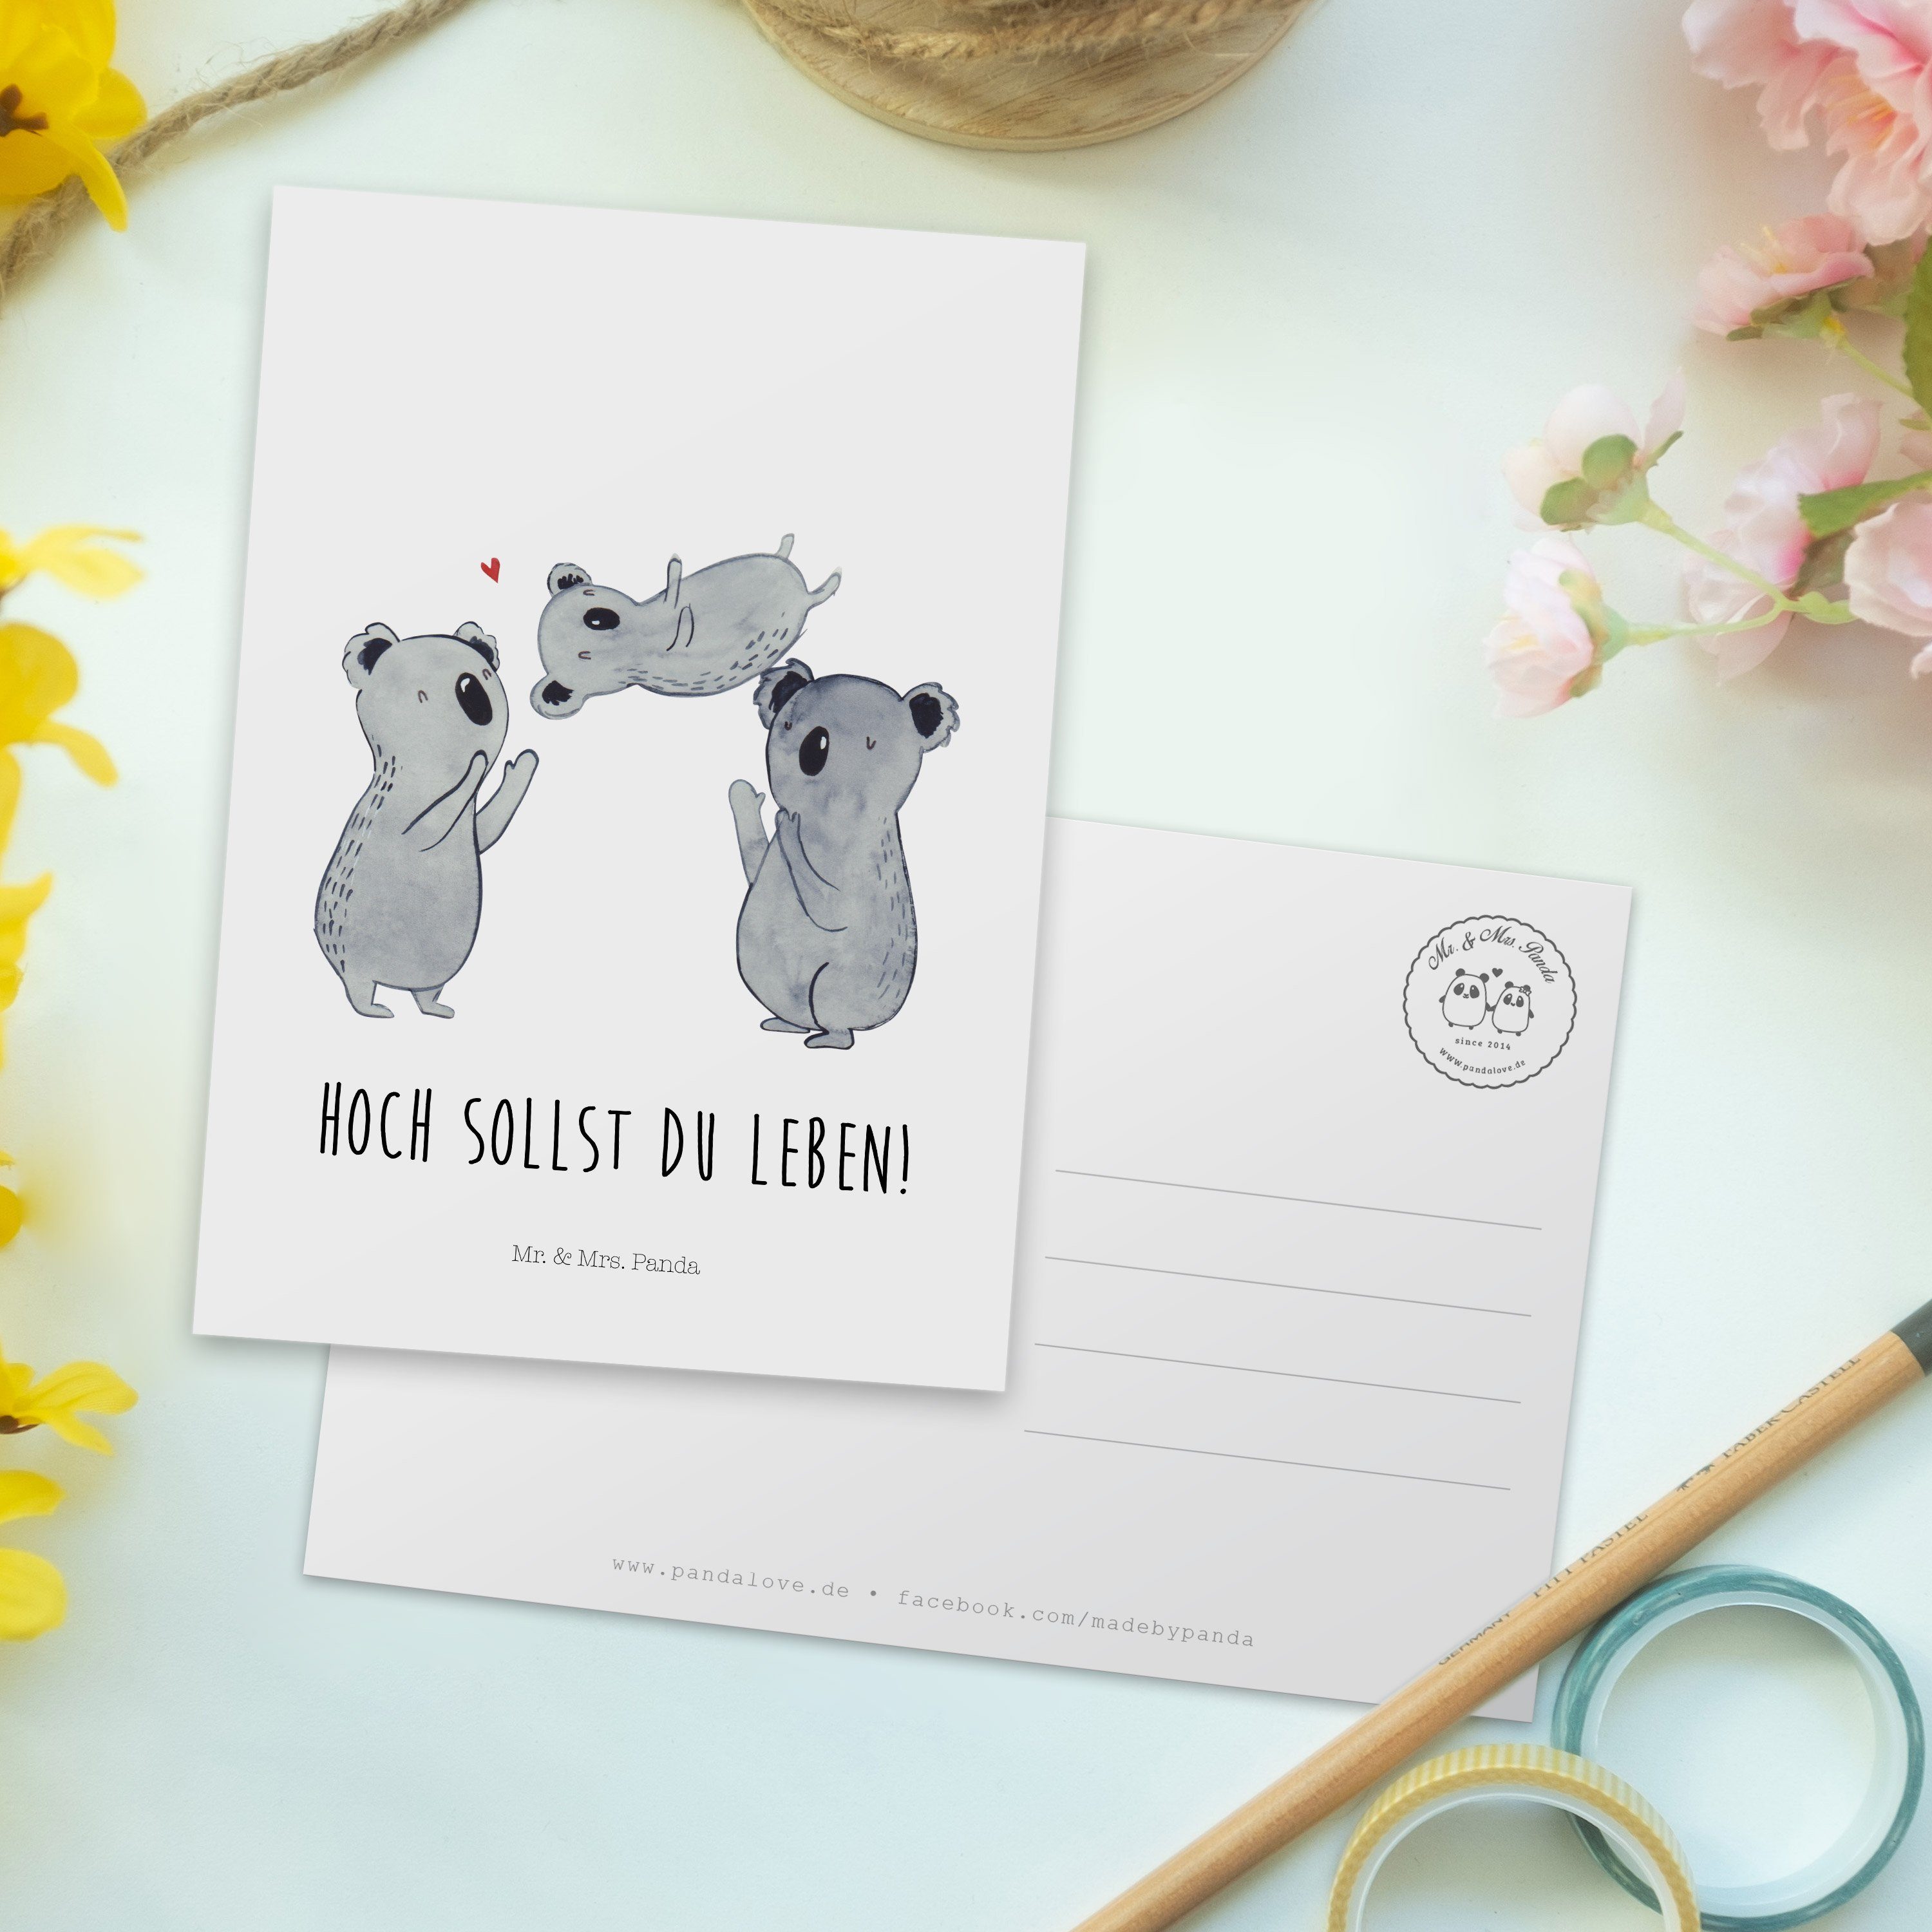 & Weiß Liebe, Geschenk, Sich Mrs. Panda Einla Geburtstag, Feiern - - Koala Mr. Koalas, Postkarte